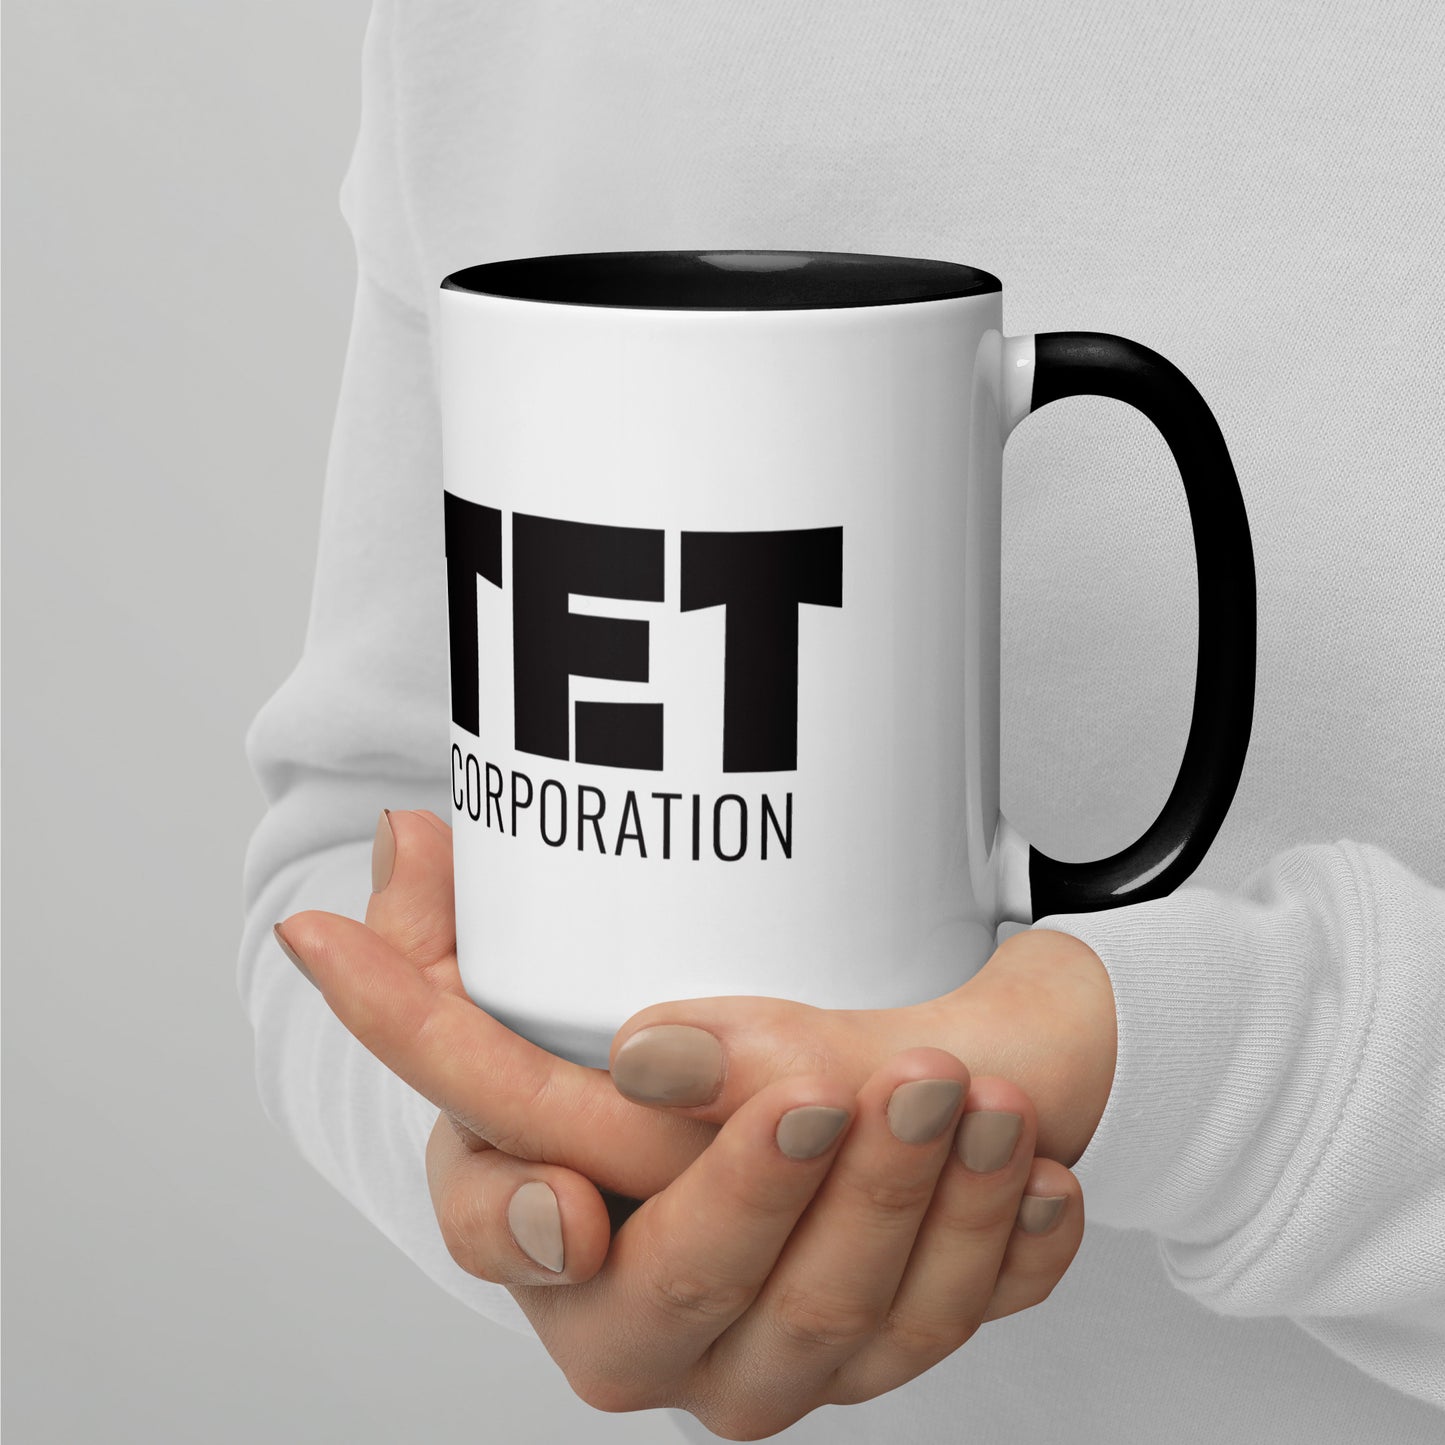 Tet Corporation Mug